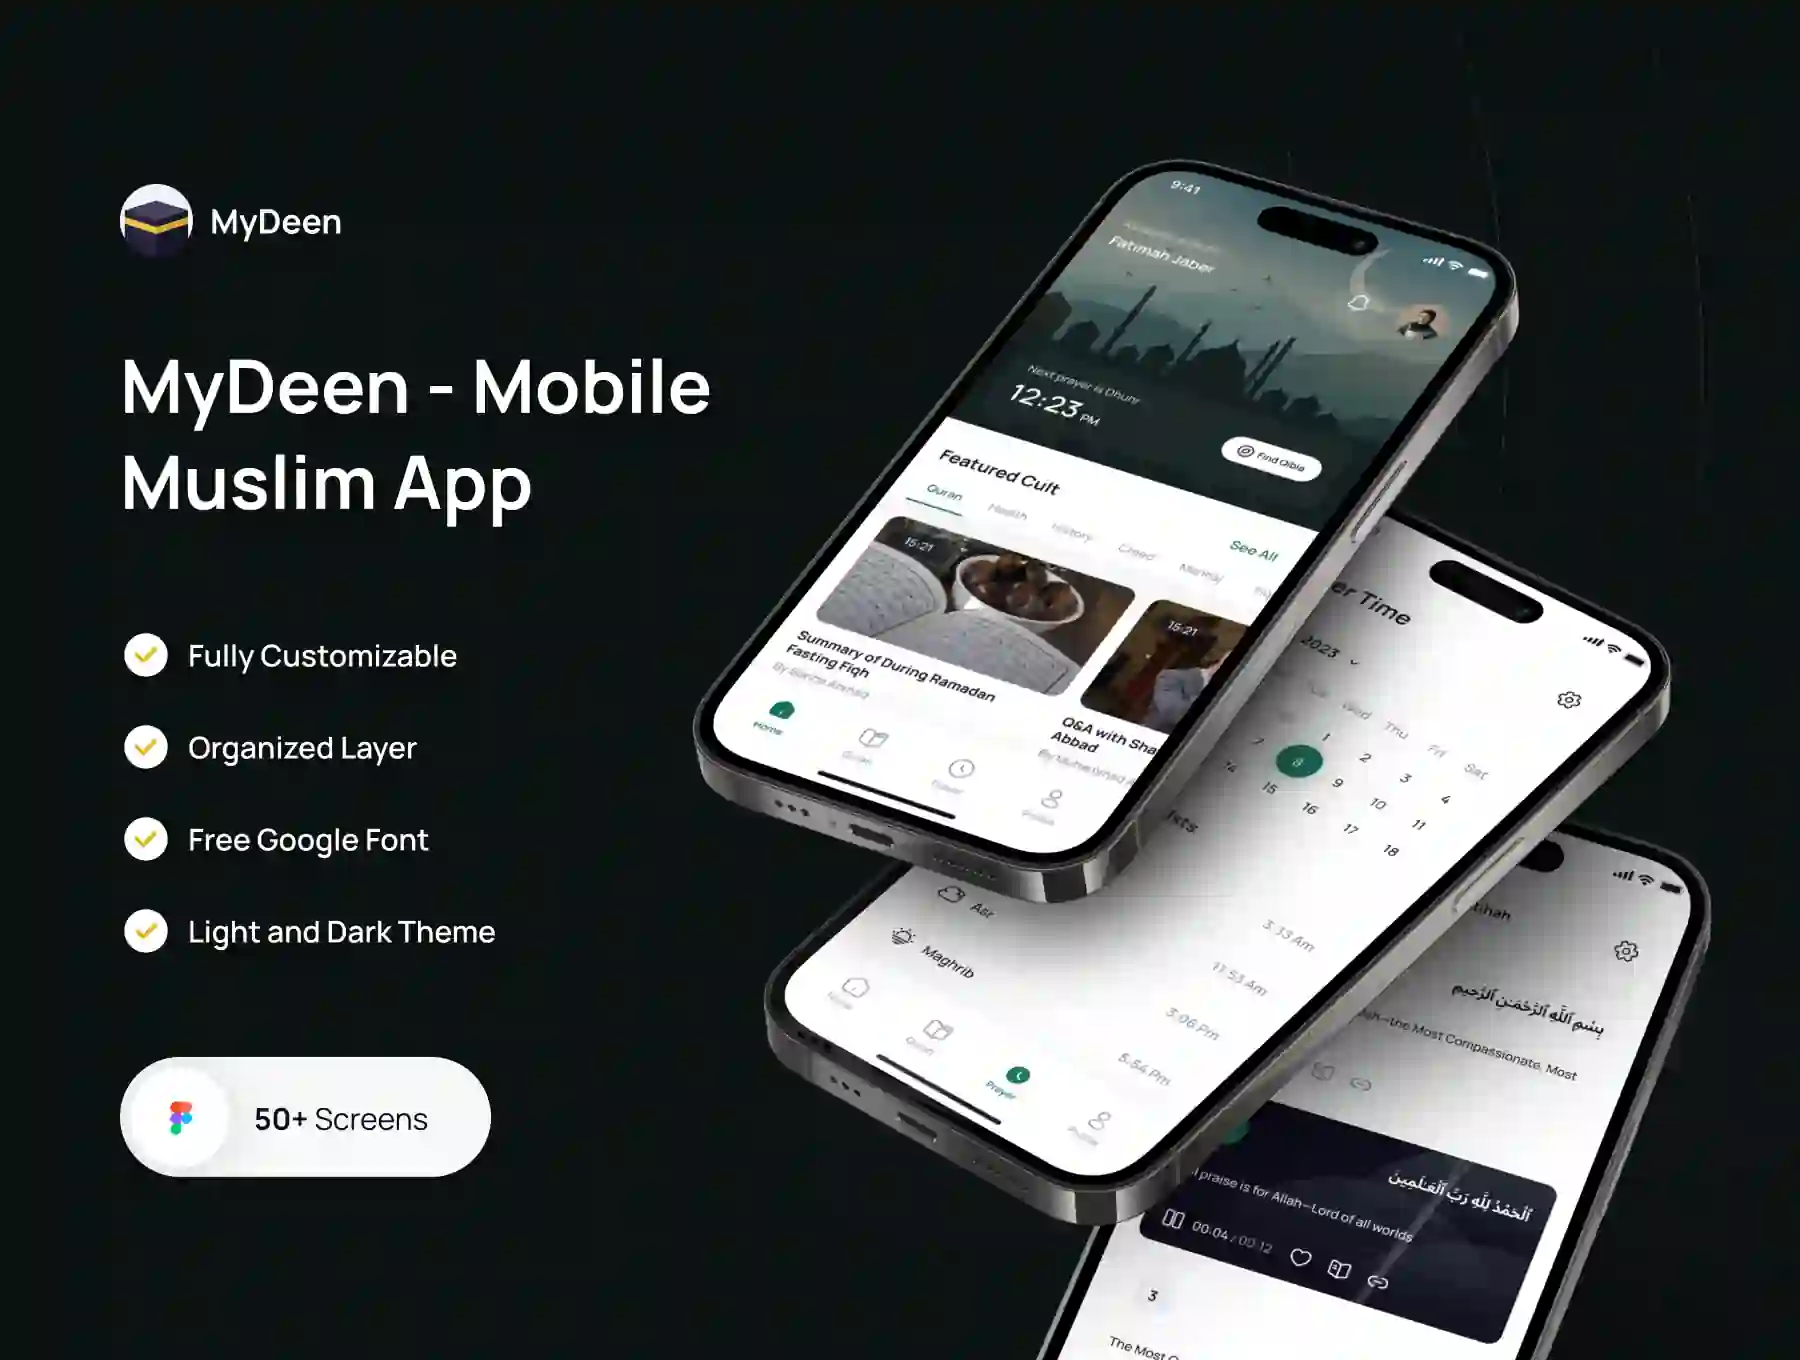 MyDeen - Mobile Muslim App